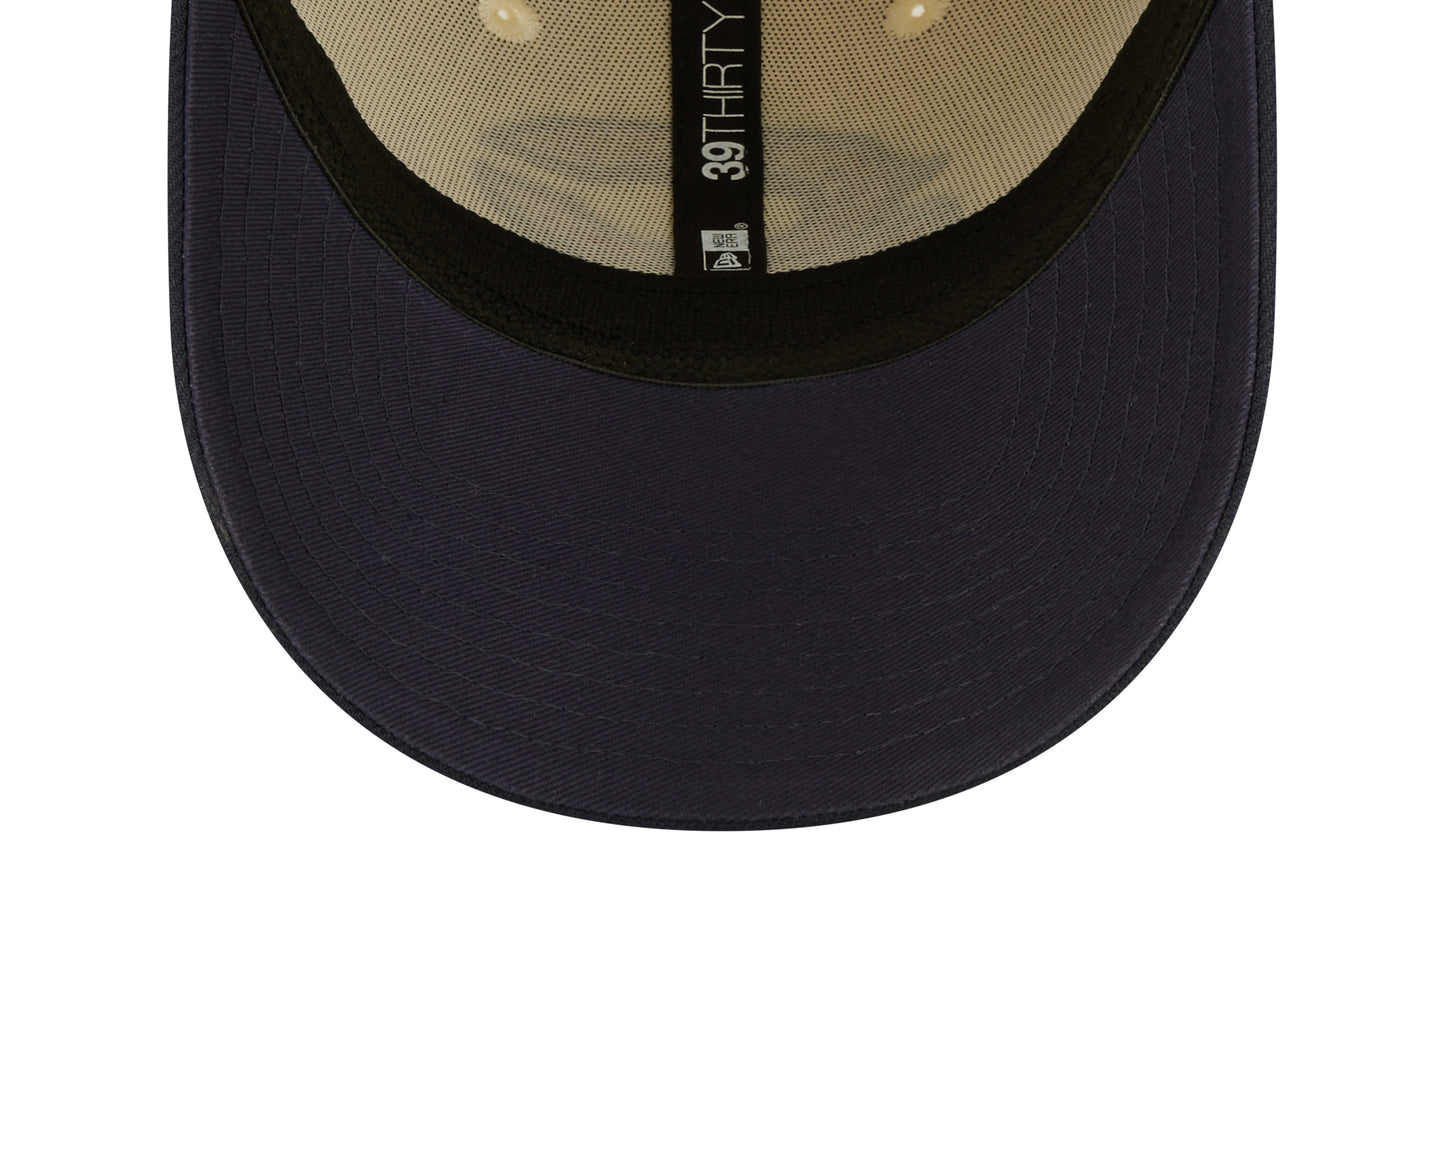 Men's Chicago Bears Primary Logo New Era Cream/Navy 2022 Sideline 39THIRTY Flex Hat